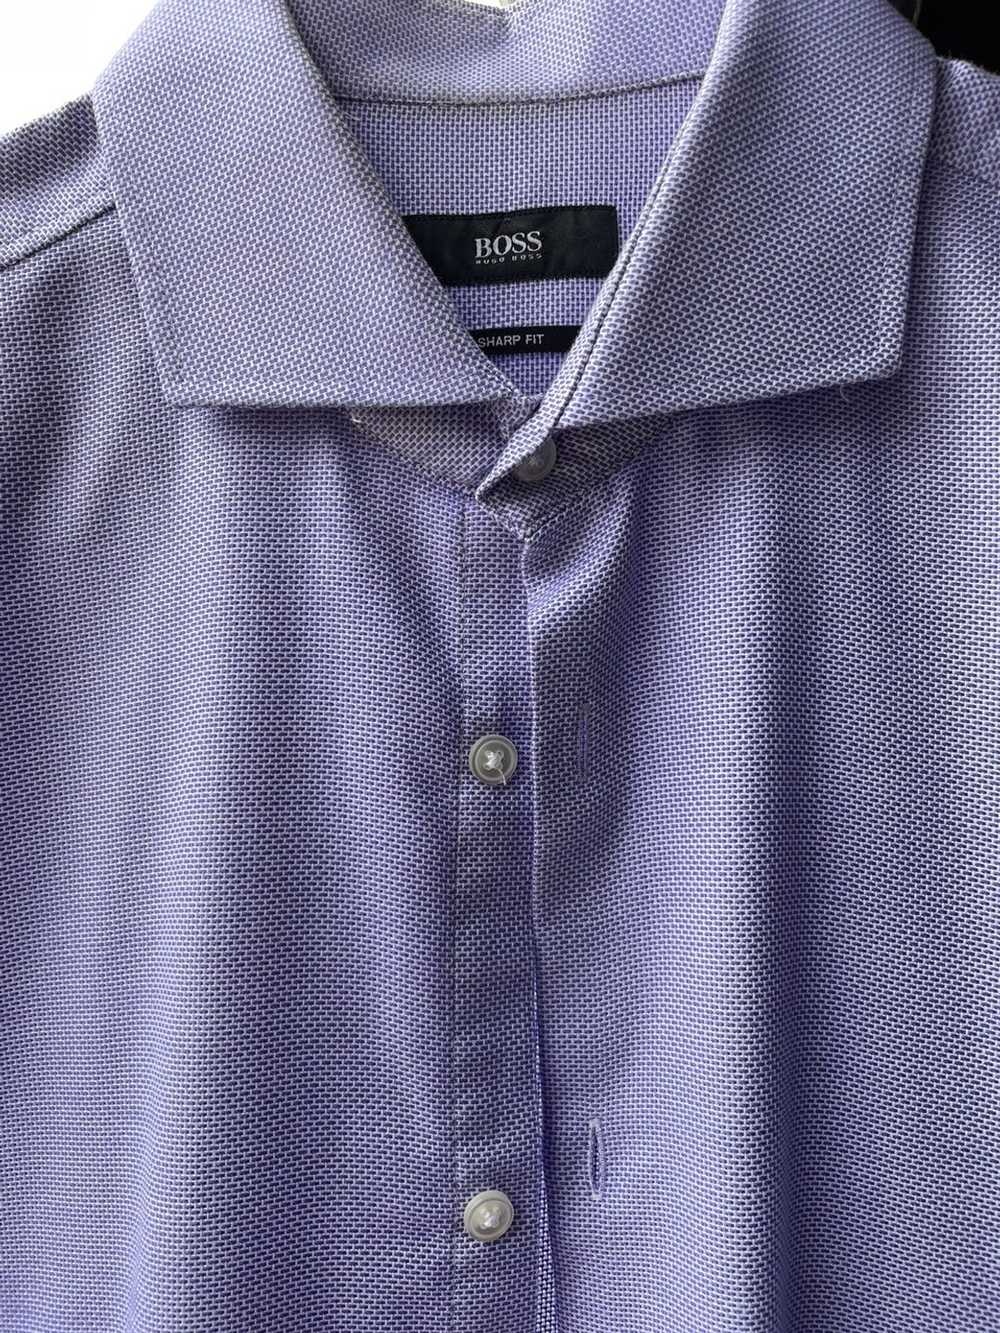 Hugo Boss Hugo Boss purple pattern dress shirt - image 2